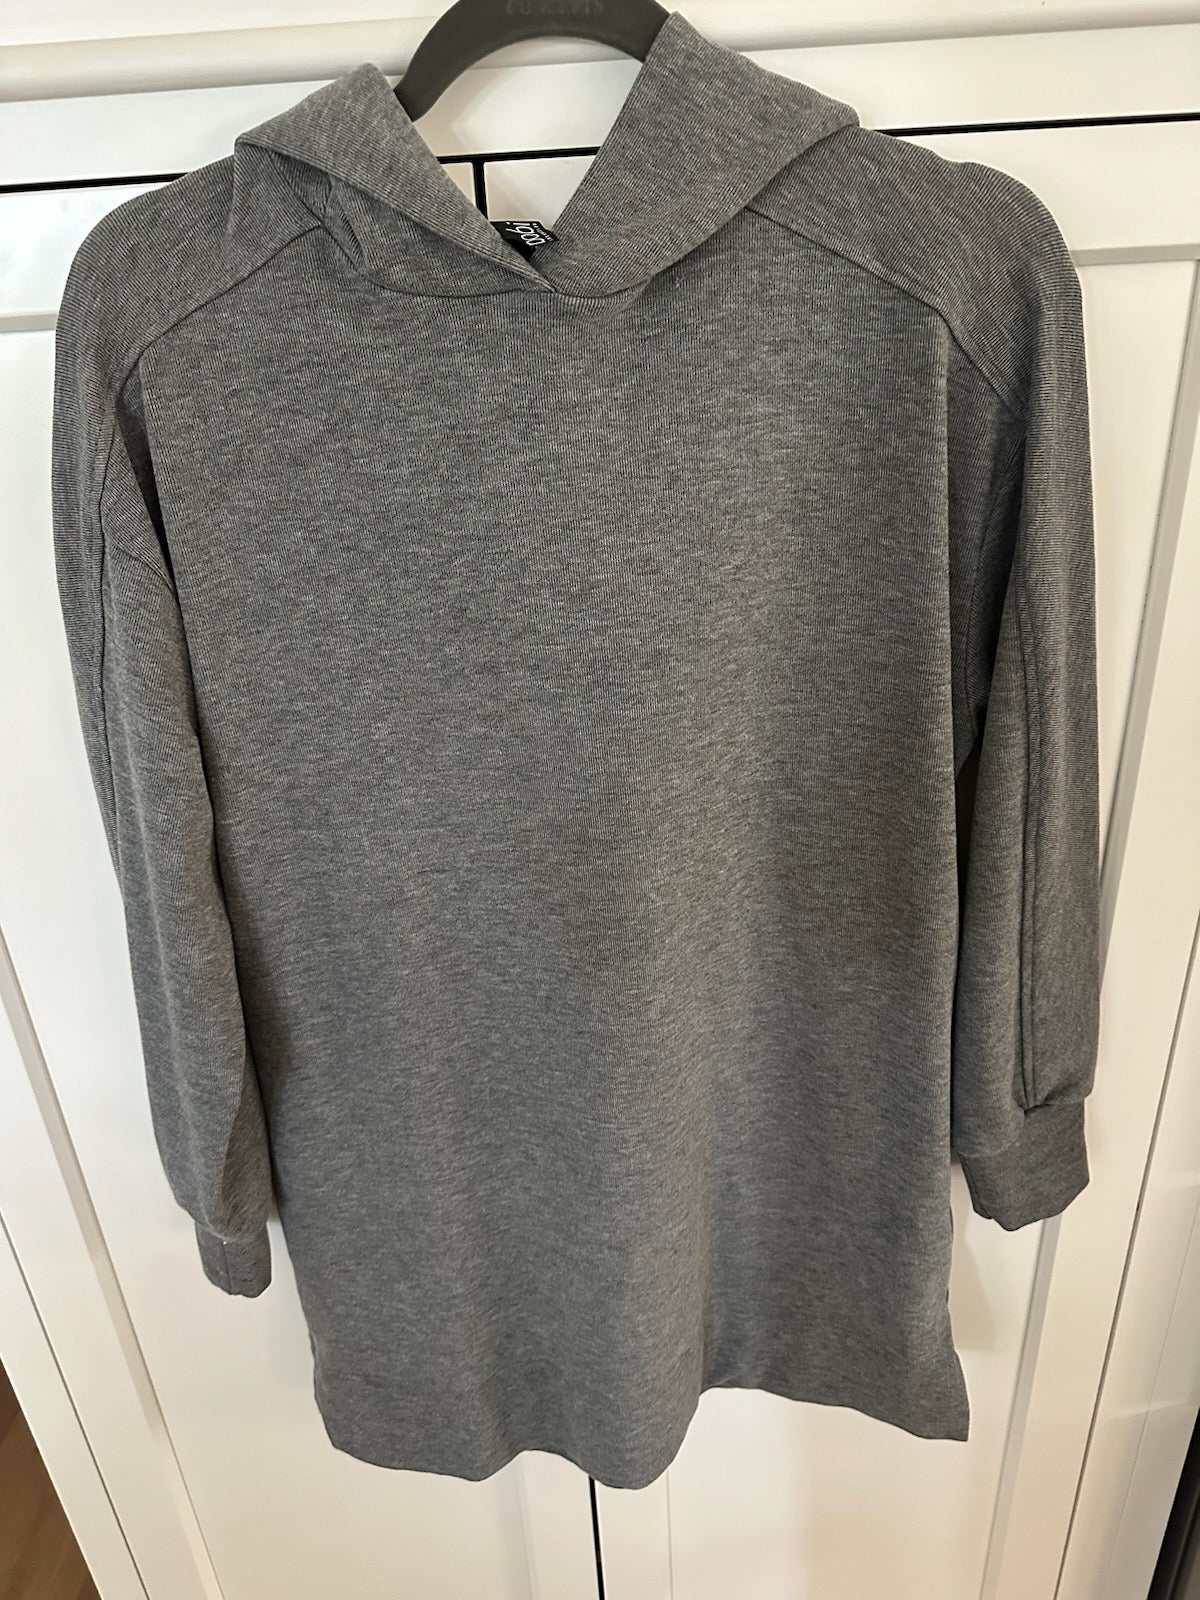 Grey hooded sweatshirt